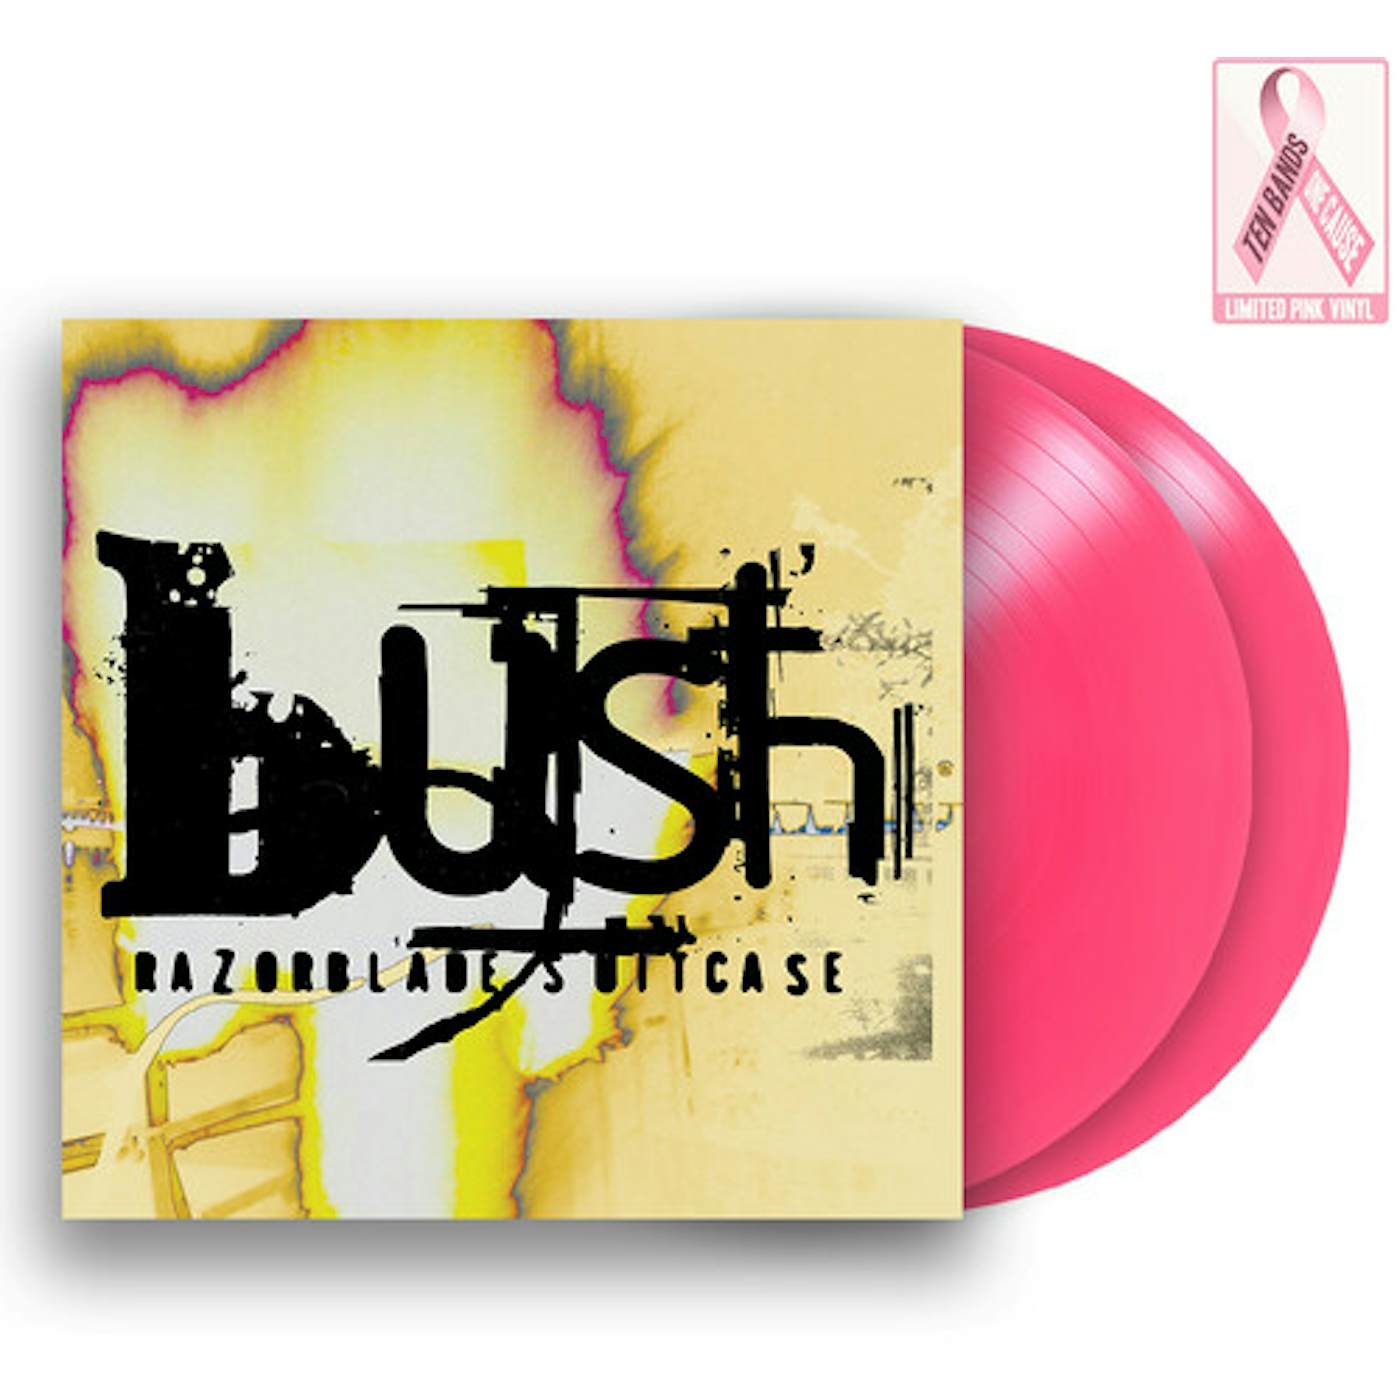 Bush Razorblade Suitcase (In Addition) Vinyl Record